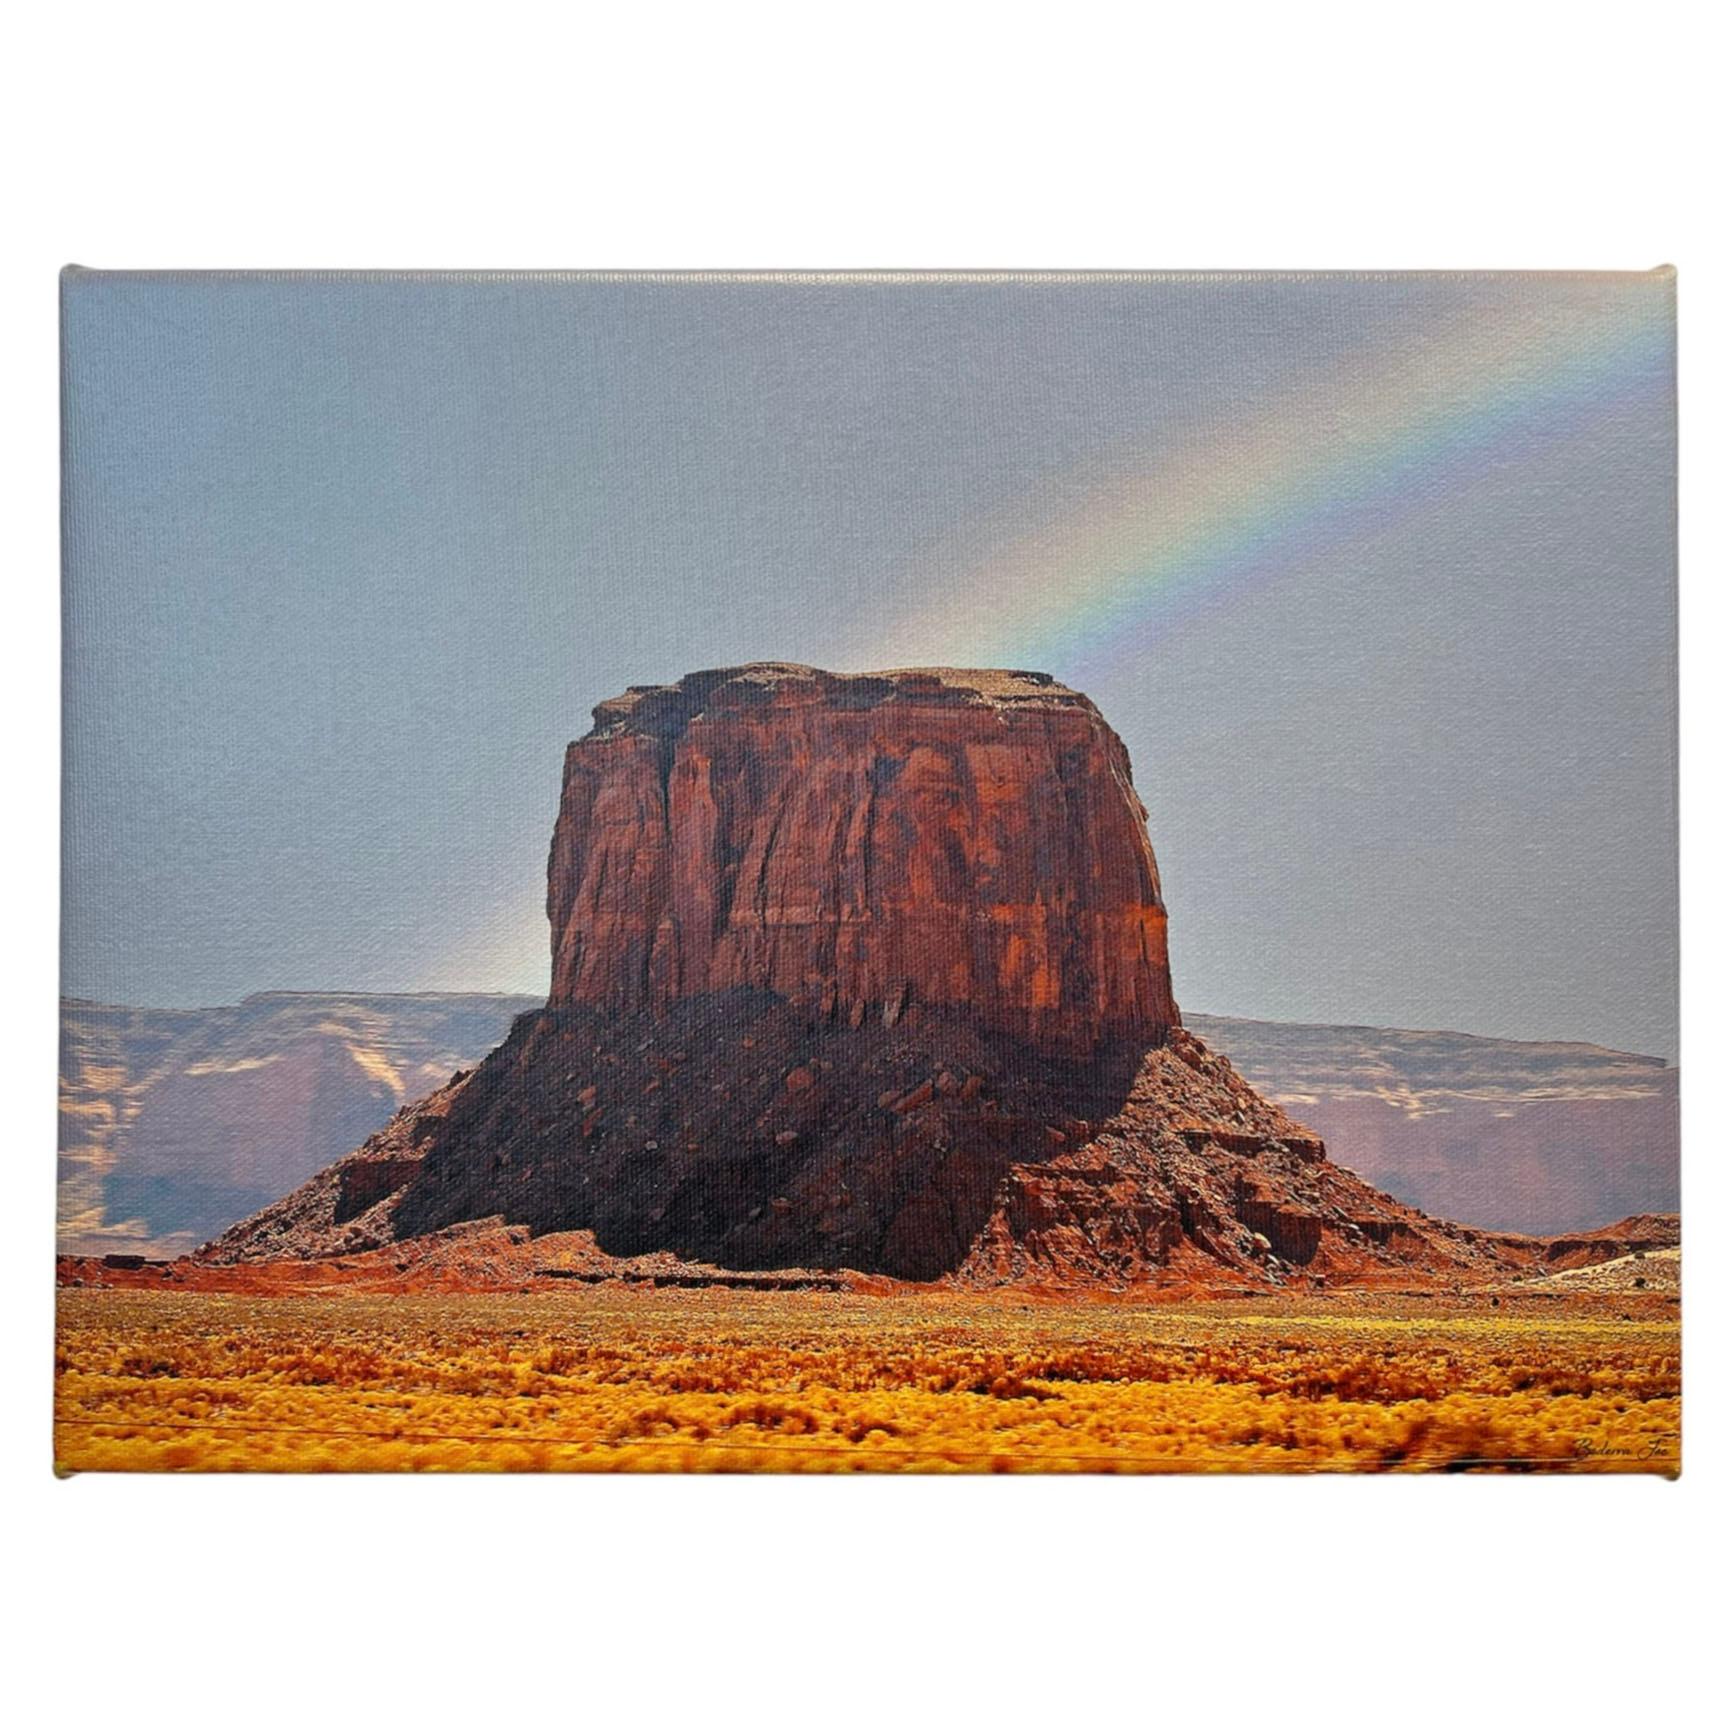 Rainbow - Photograph by Boderra Joe